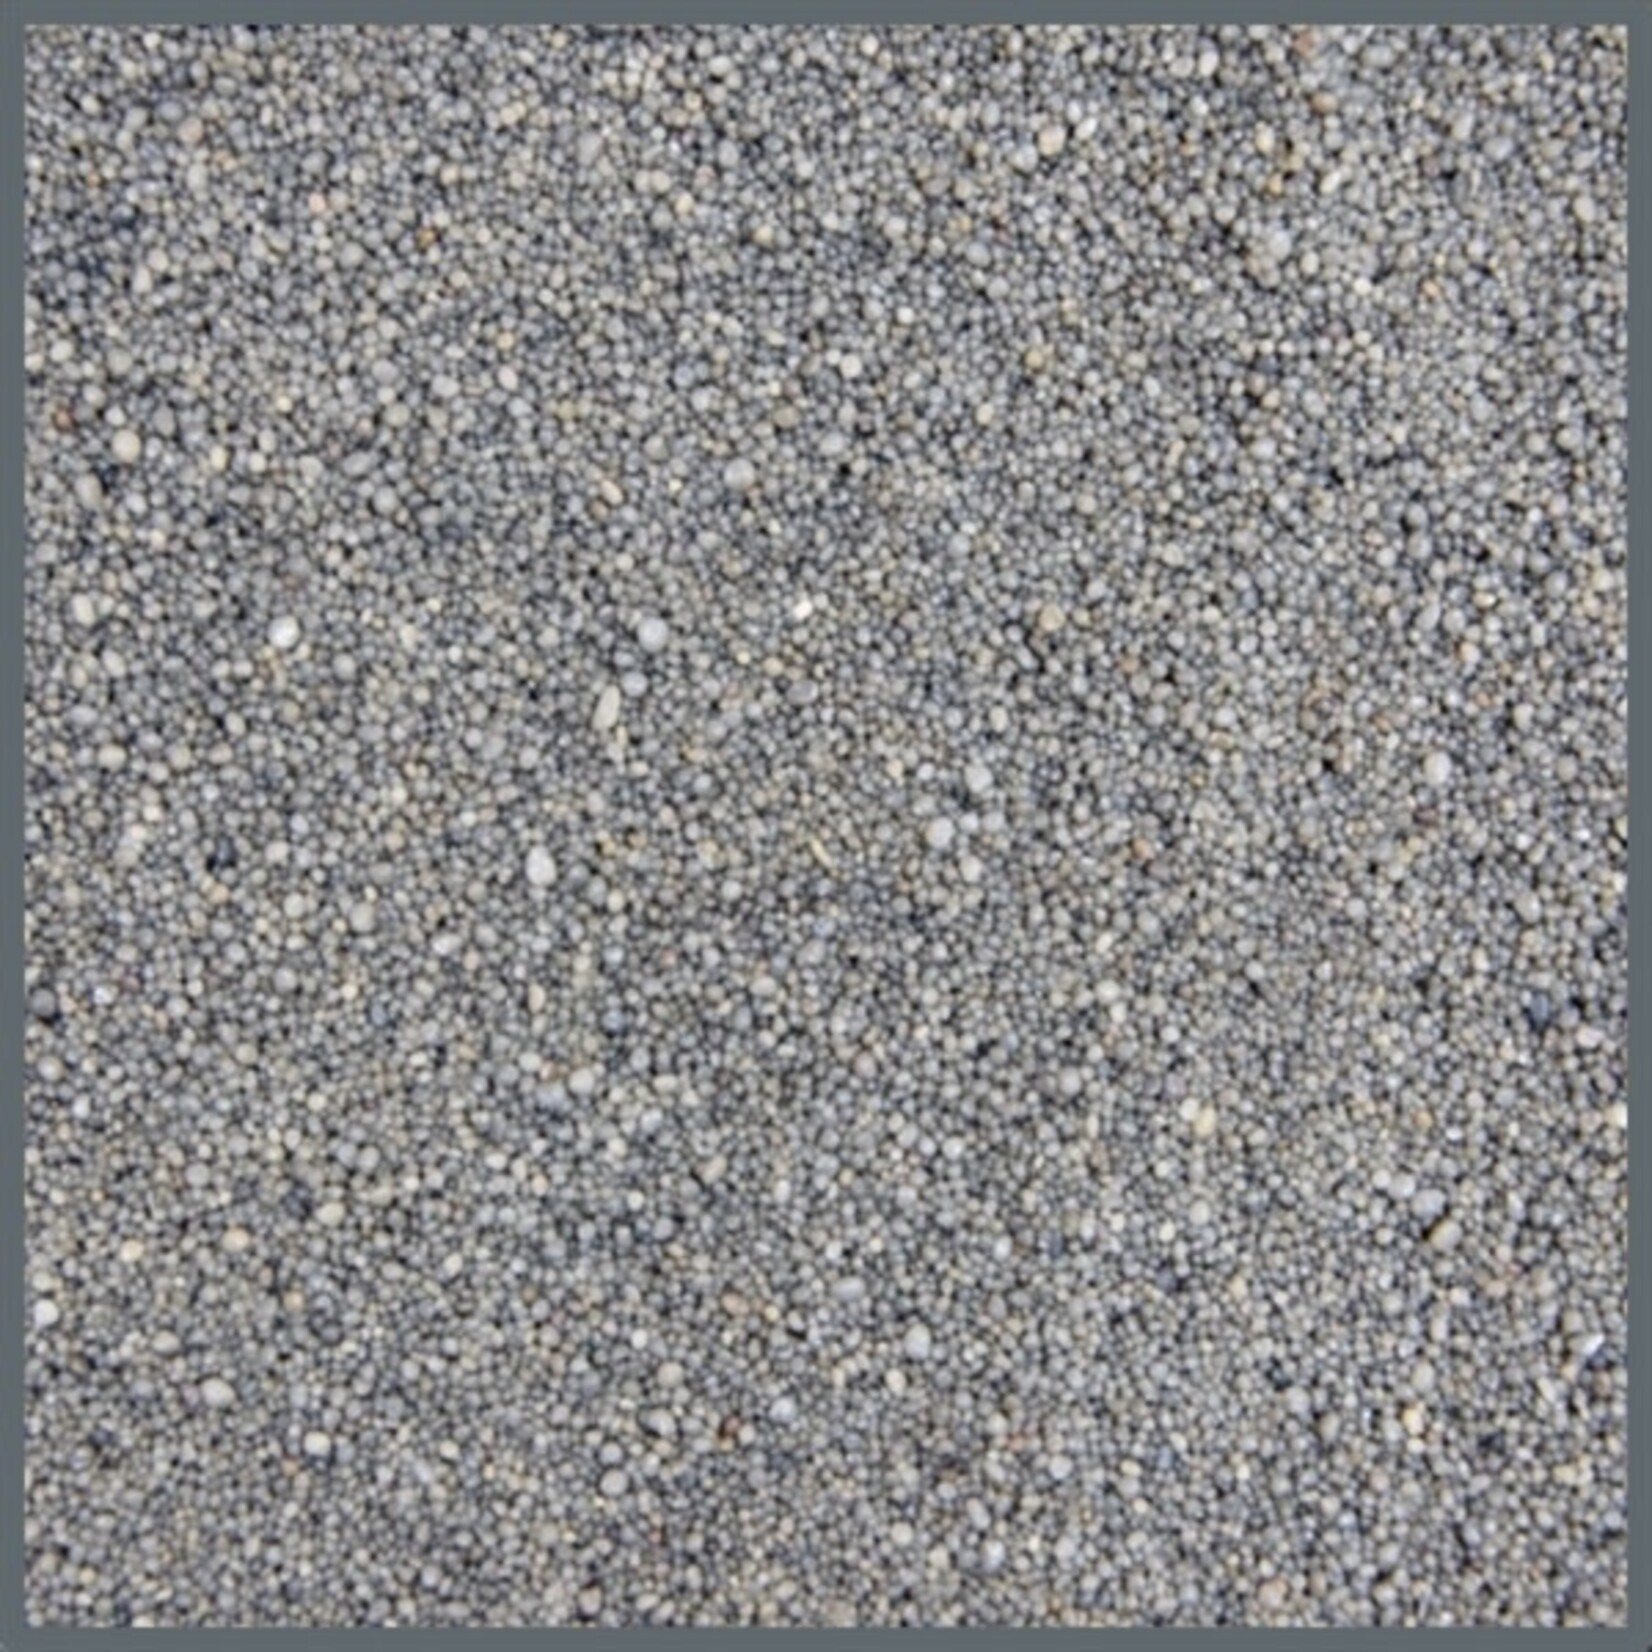 Dupla Ground colour mountain grey 0.5-1.4 mm 5 kg